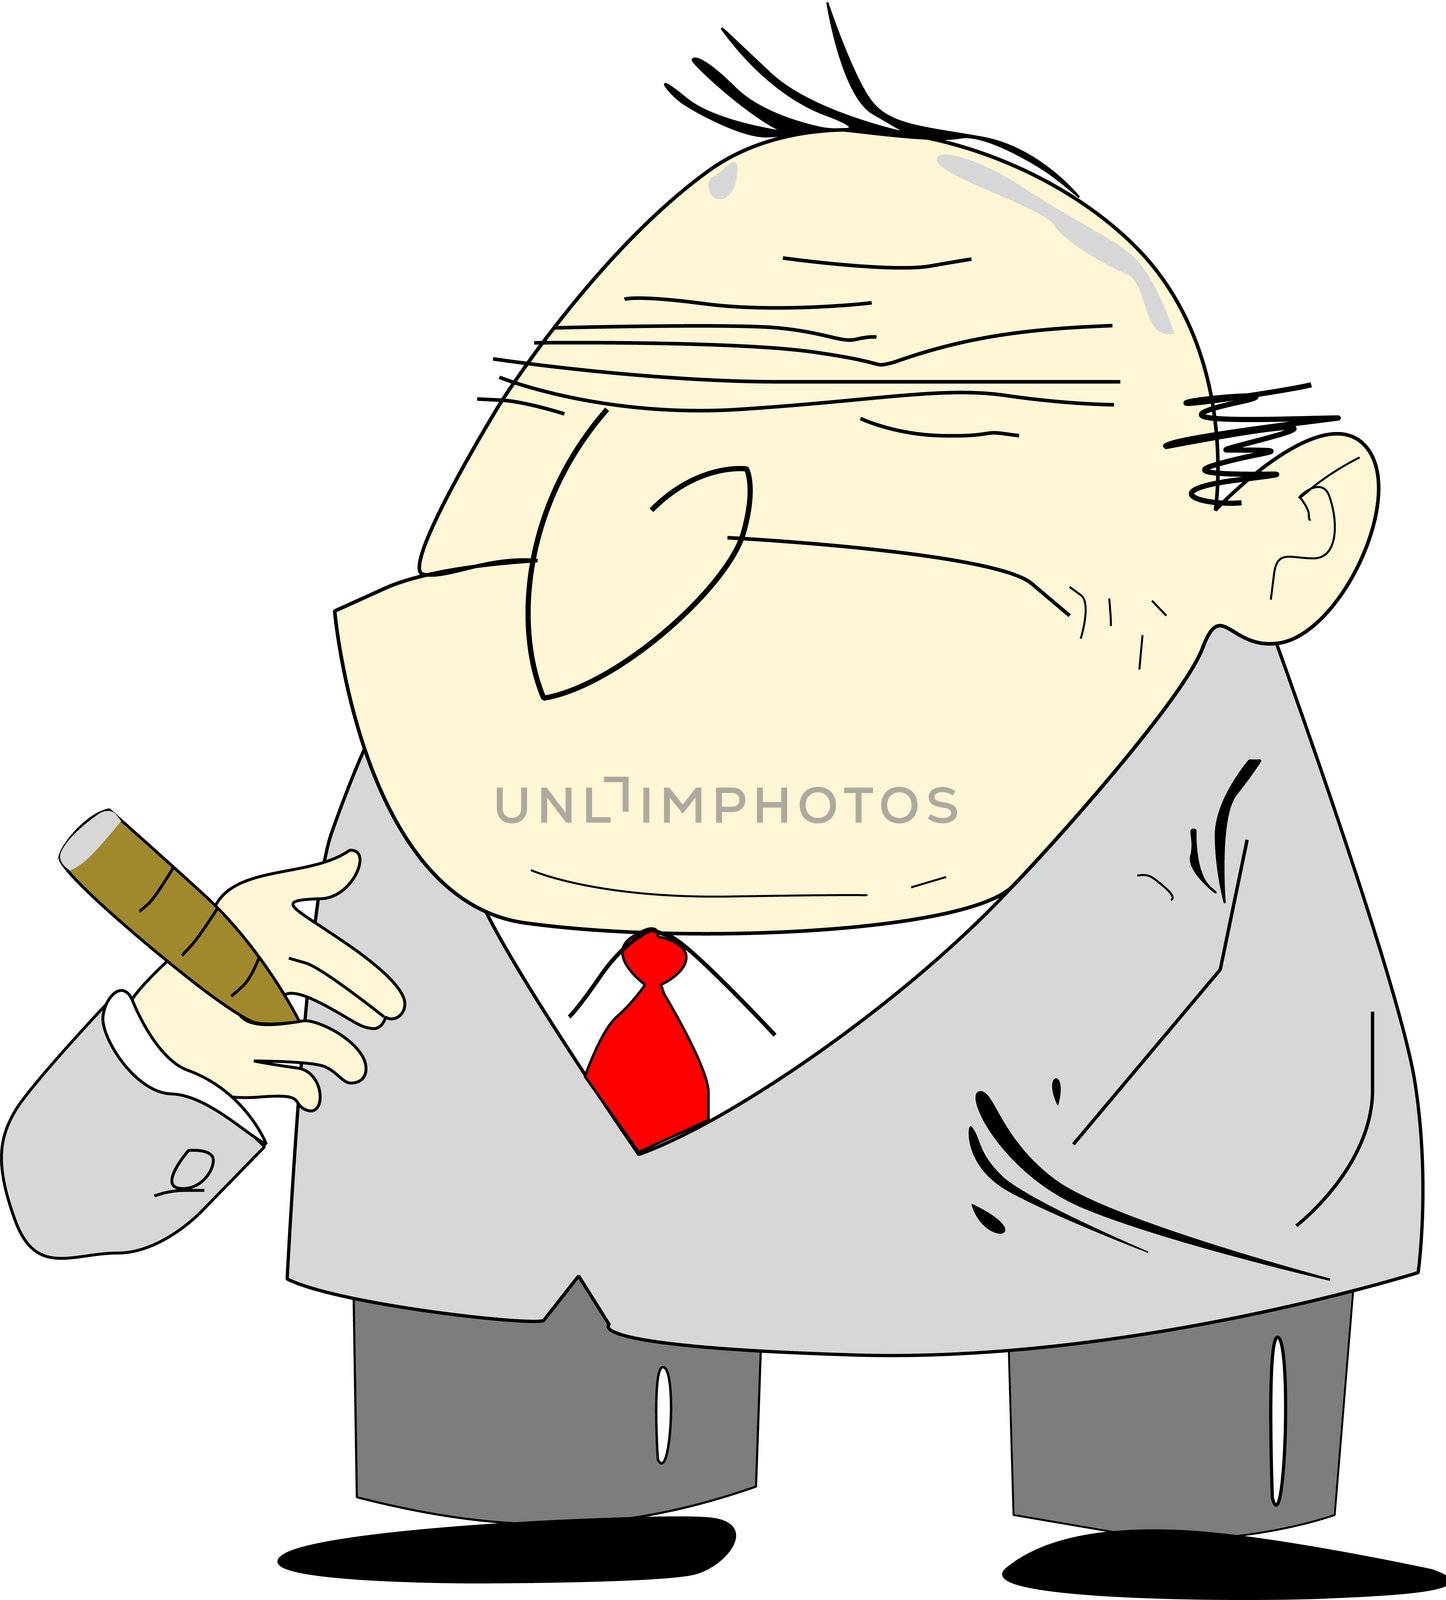 Cartoon alike of an old man depicted as a grumpy bad boss.